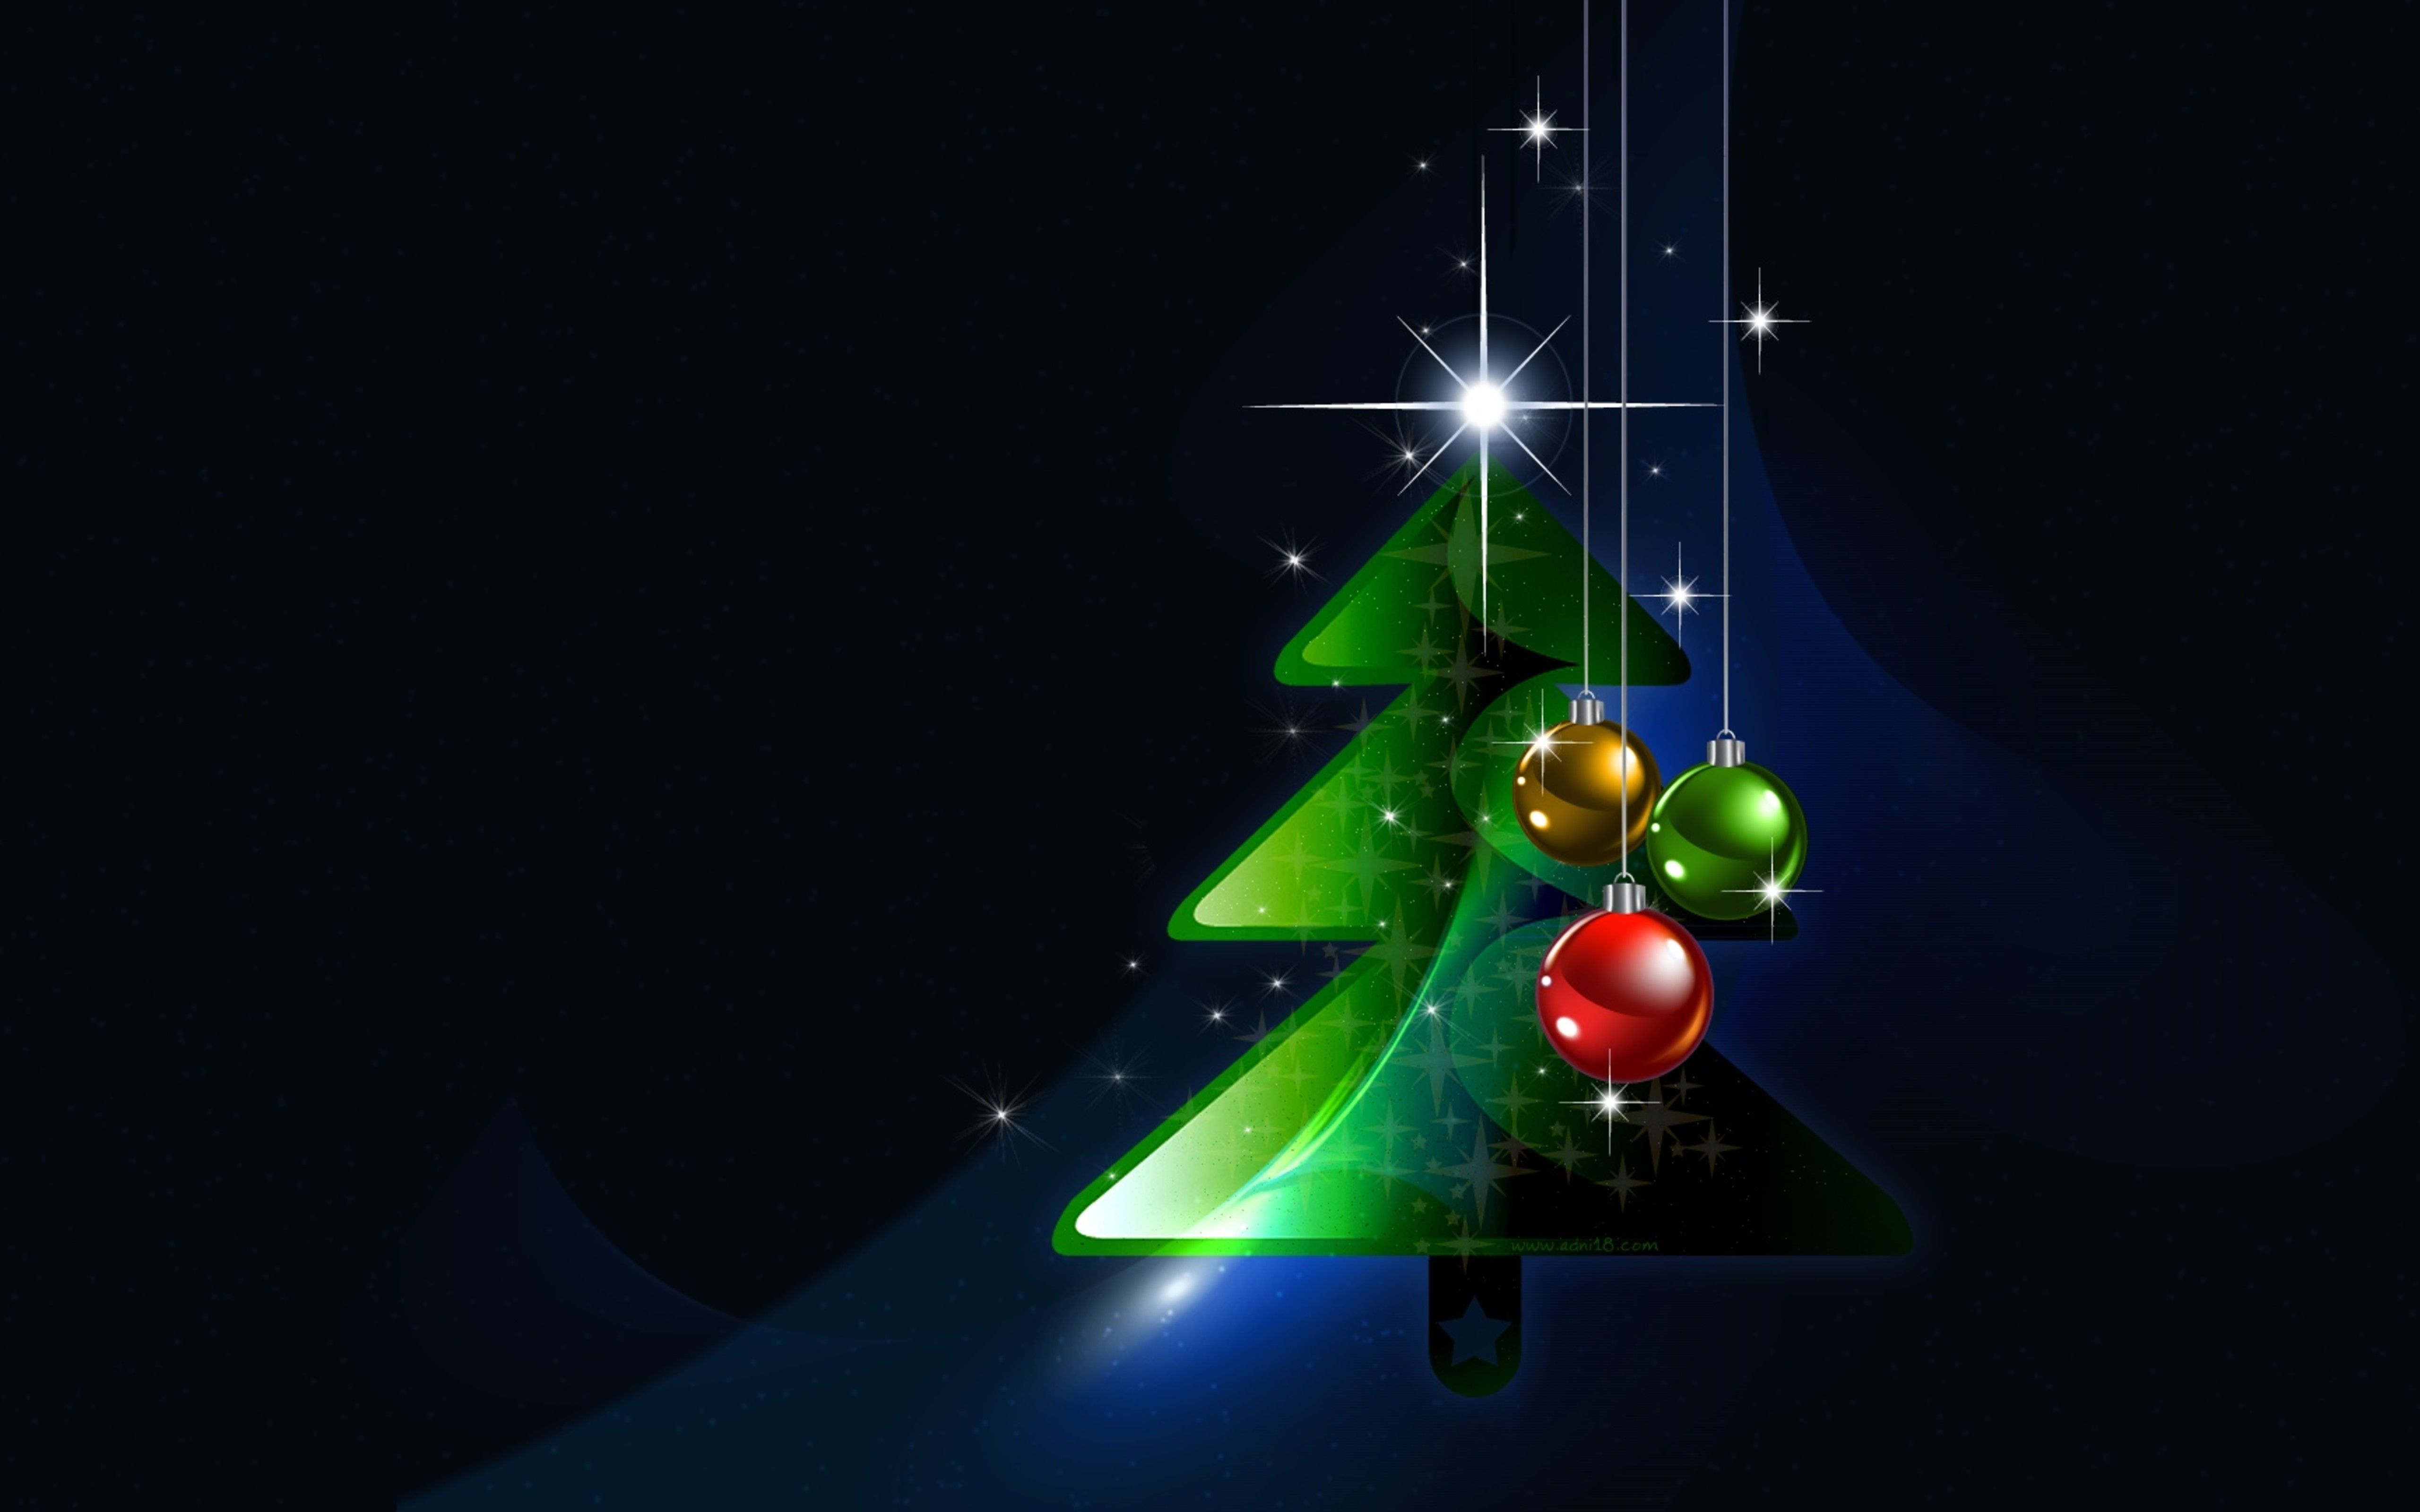 Wallpaper Download 5120x3200 Christmas tree in the dark of night star. Christmas. Christmas desktop, Merry christmas wallpaper, Wallpaper iphone christmas